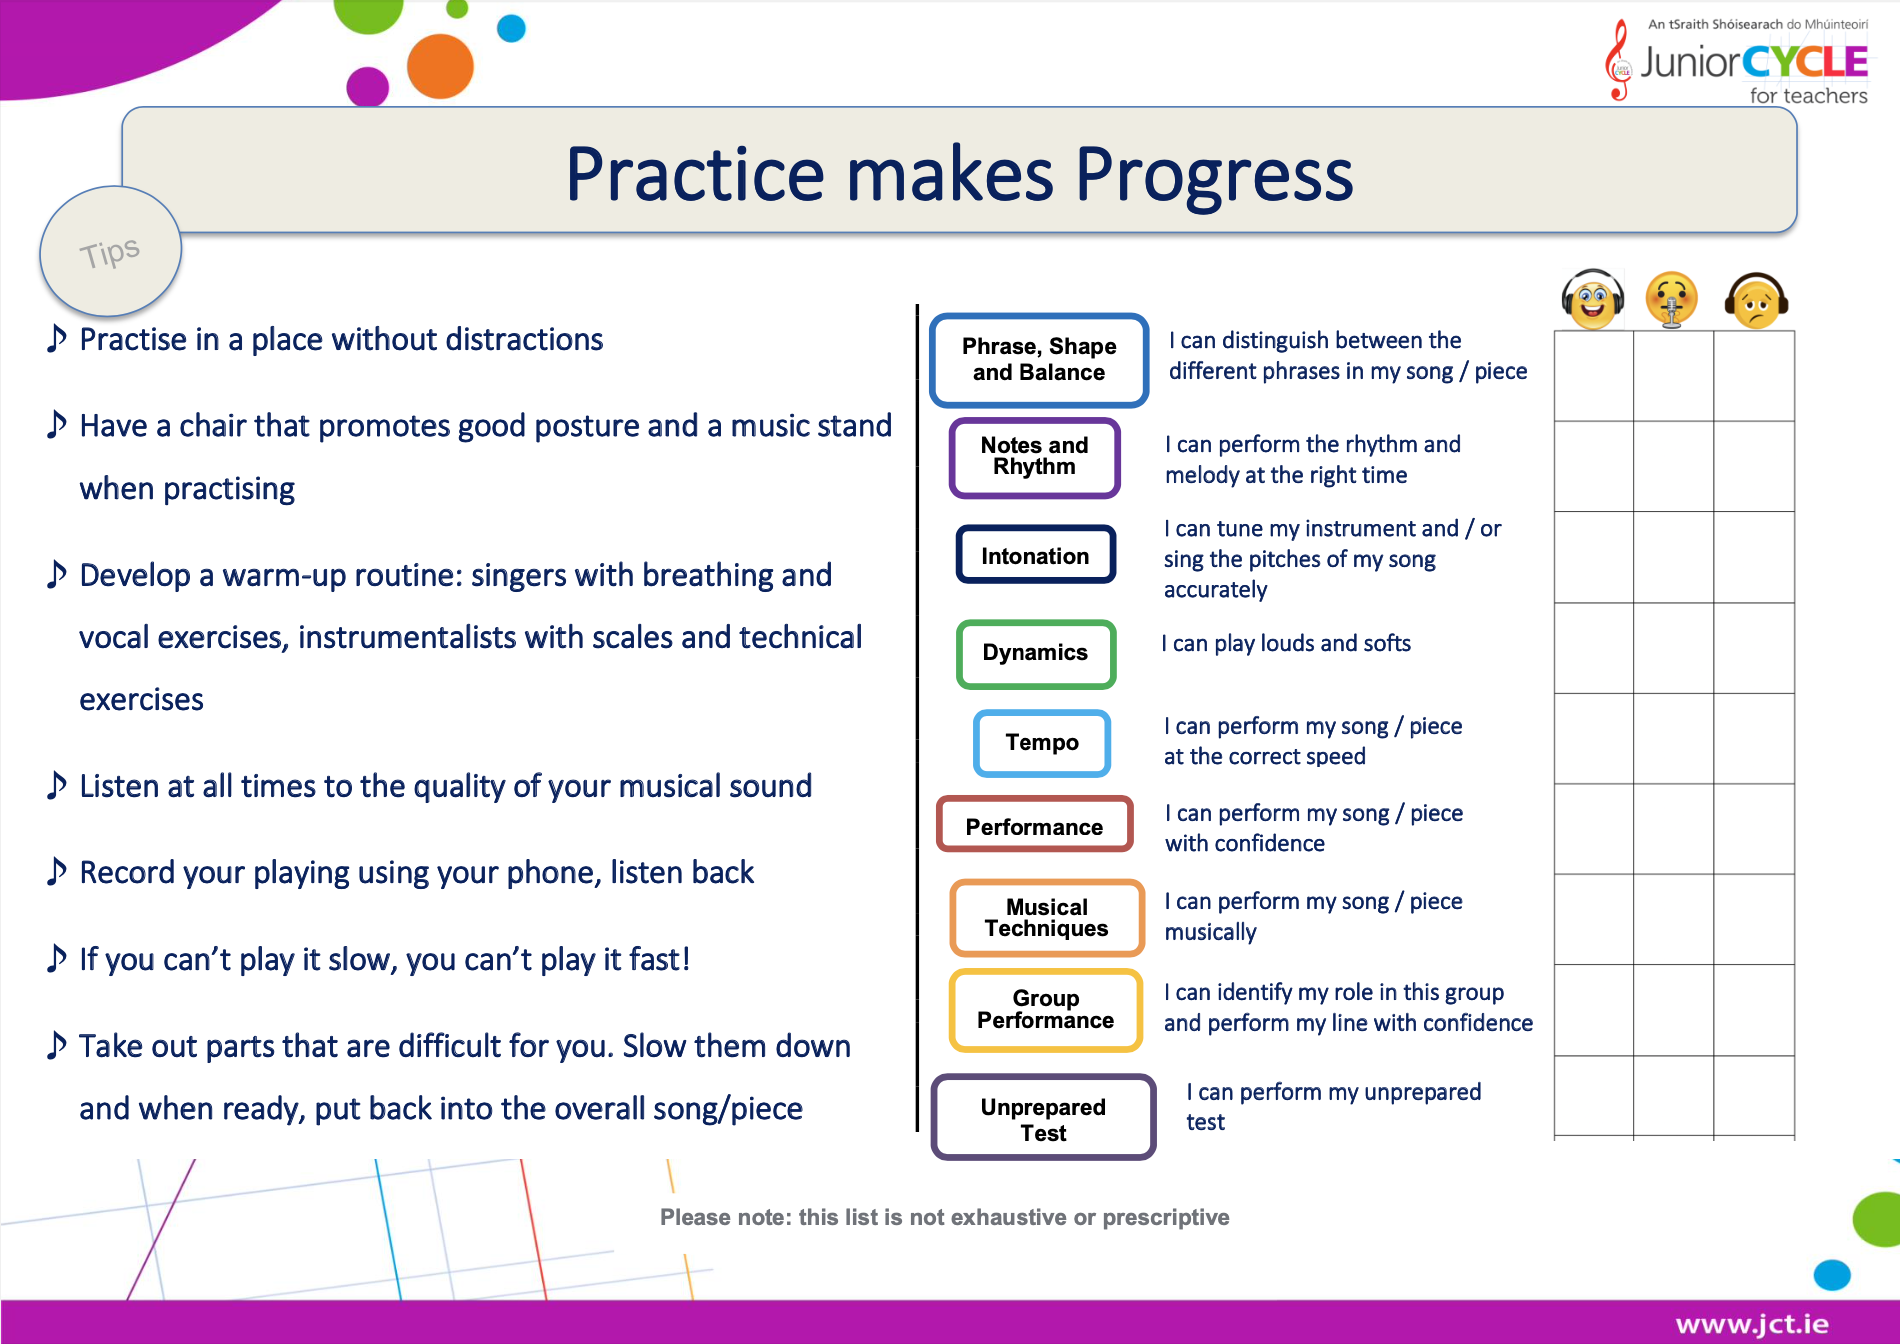 Student Reflective Diary - Practice Makes Progress